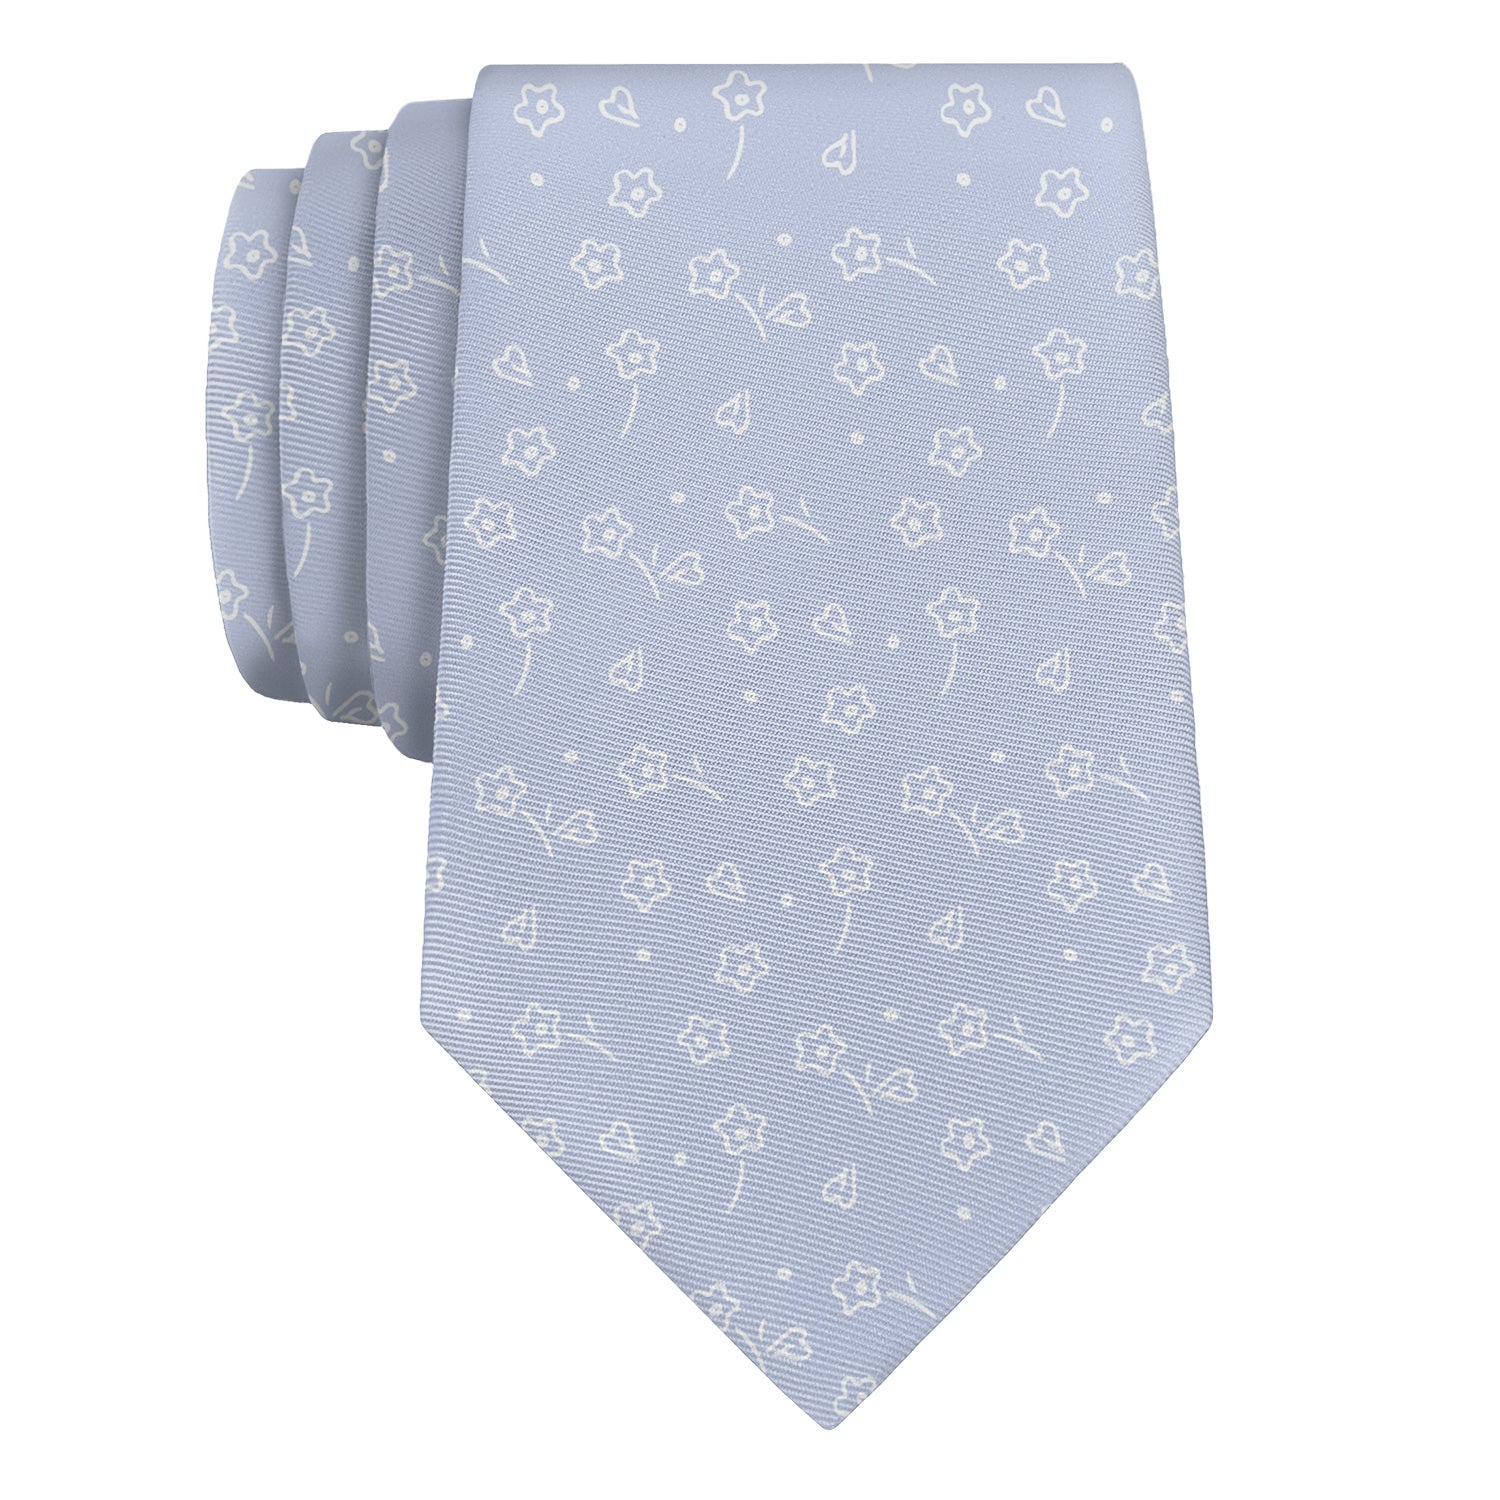 Zoey Floral Necktie - Knotty 2.75" -  - Knotty Tie Co.